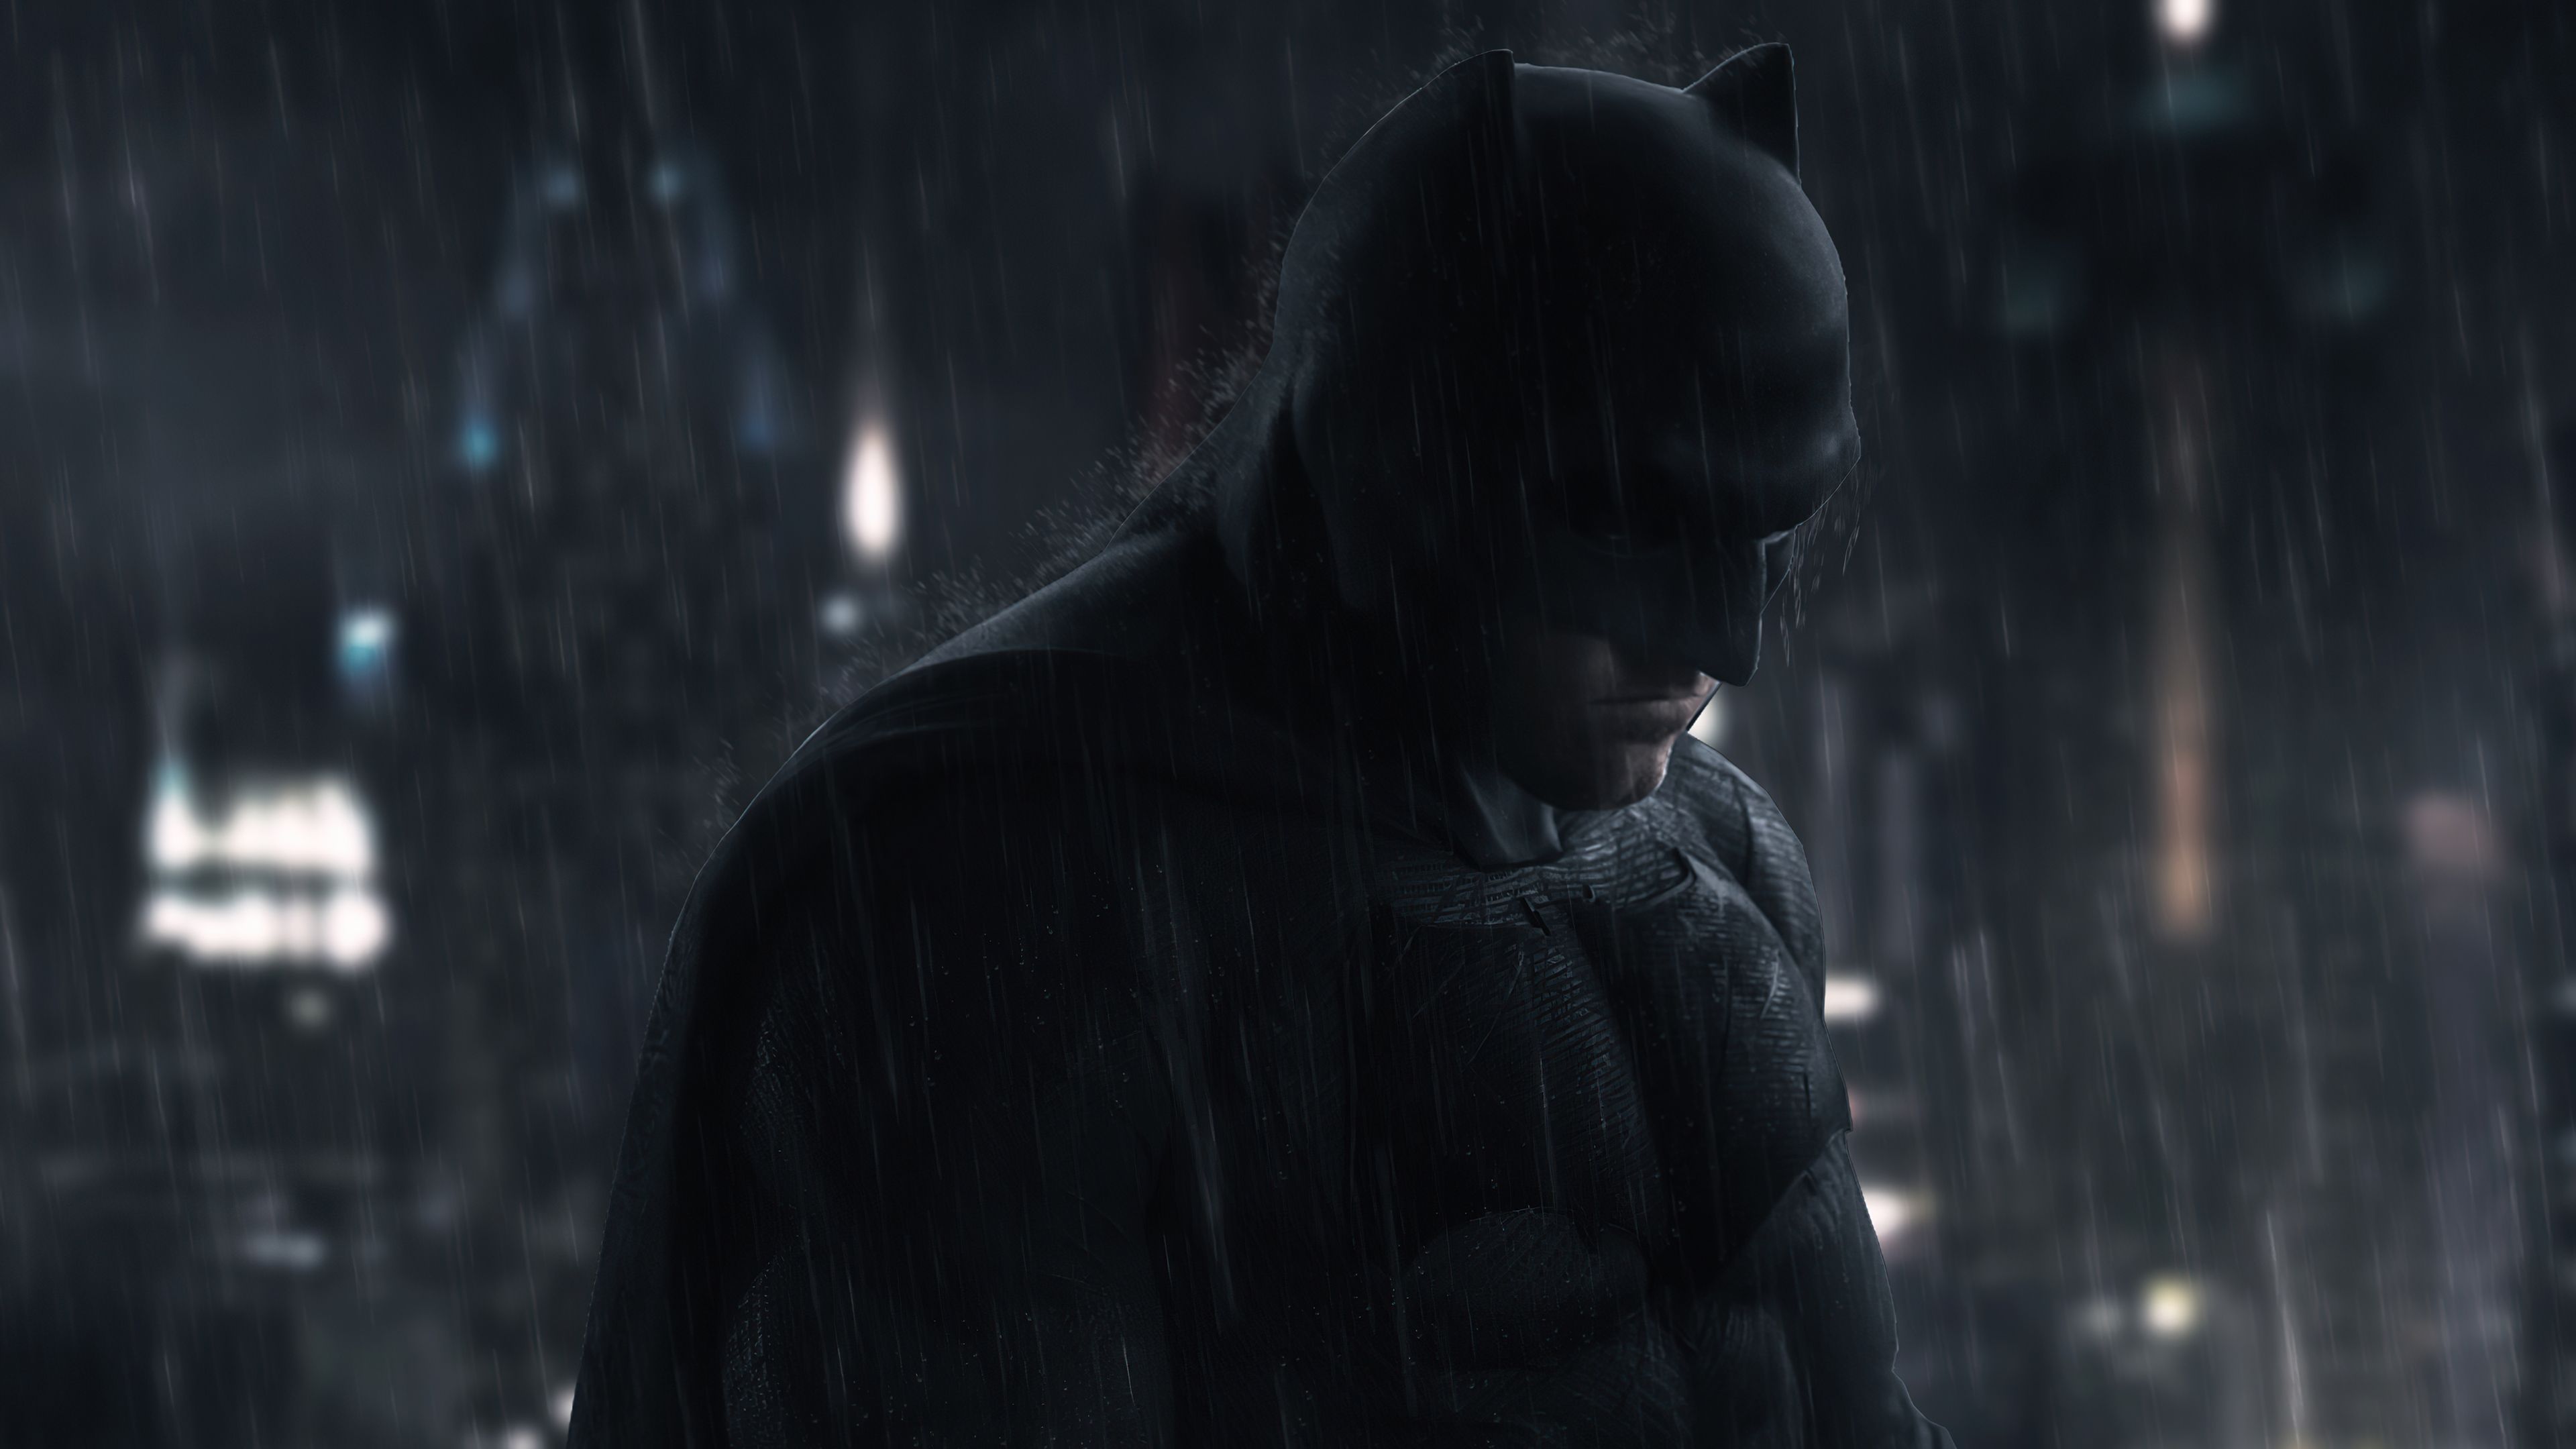 Batman In Dark Rain 4k, HD Superheroes, 4k Wallpaper, Image, Background, Photo and Picture